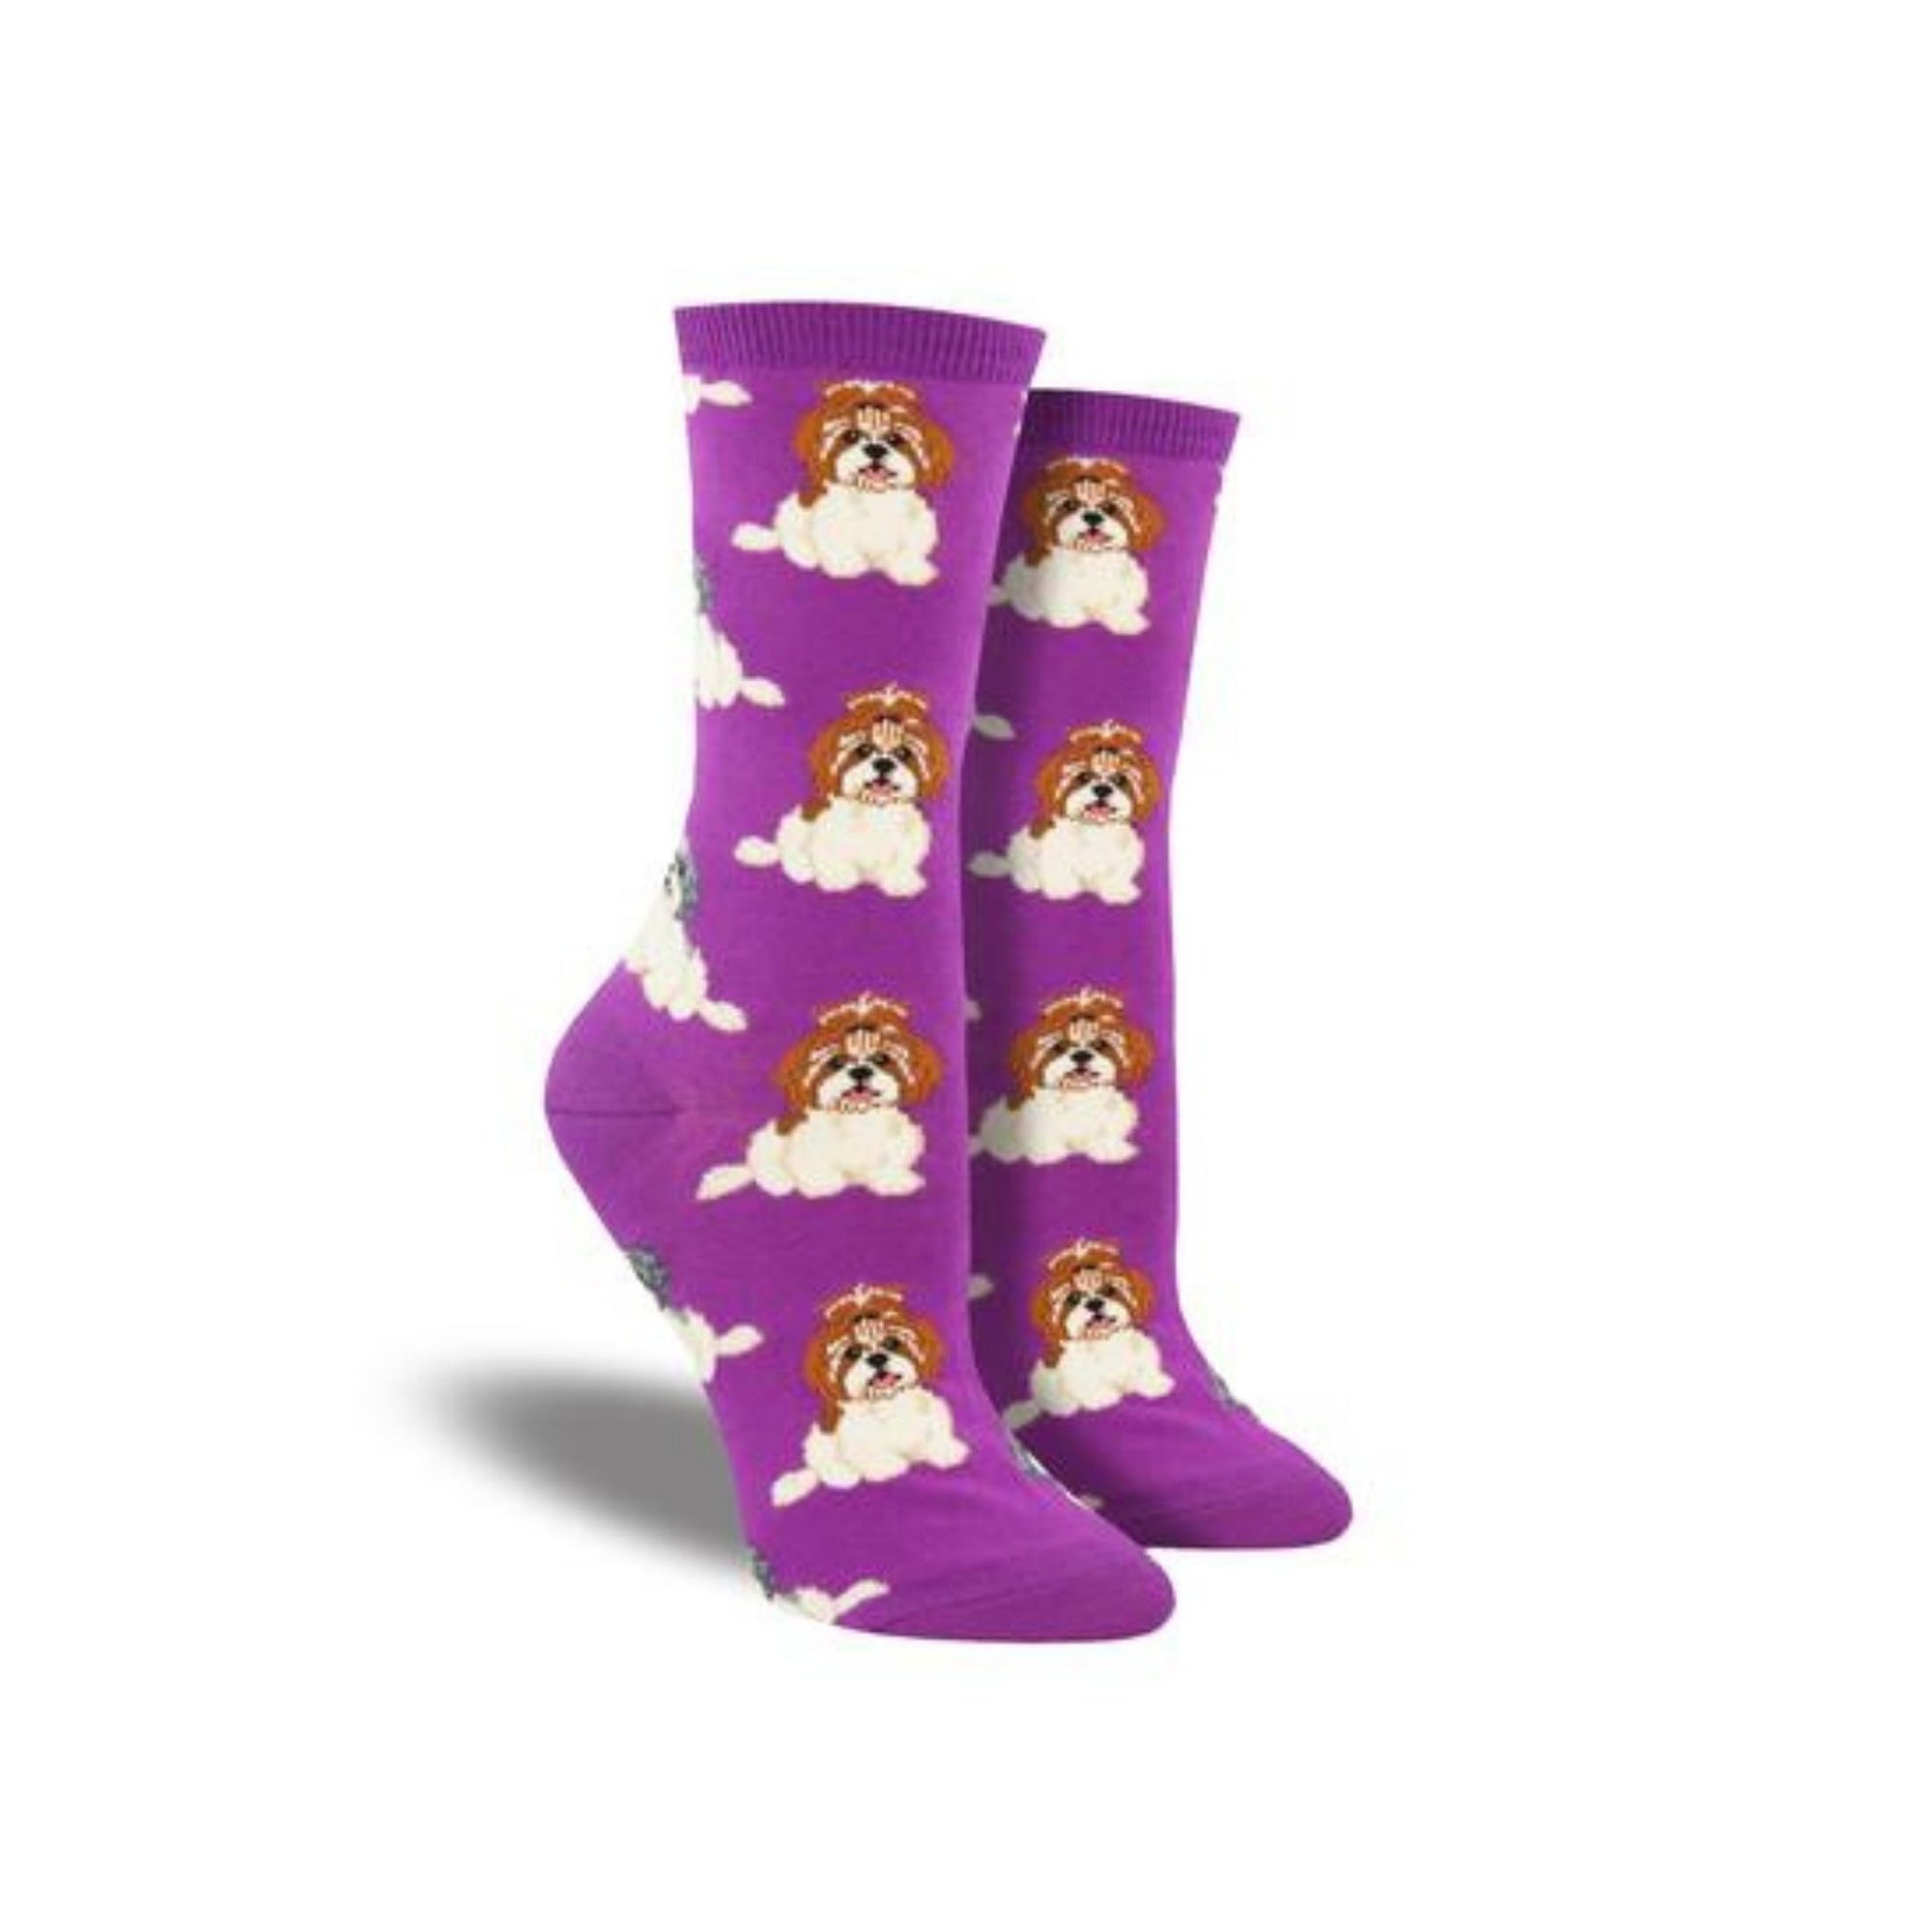 Purple socks with Shih Tzus on them